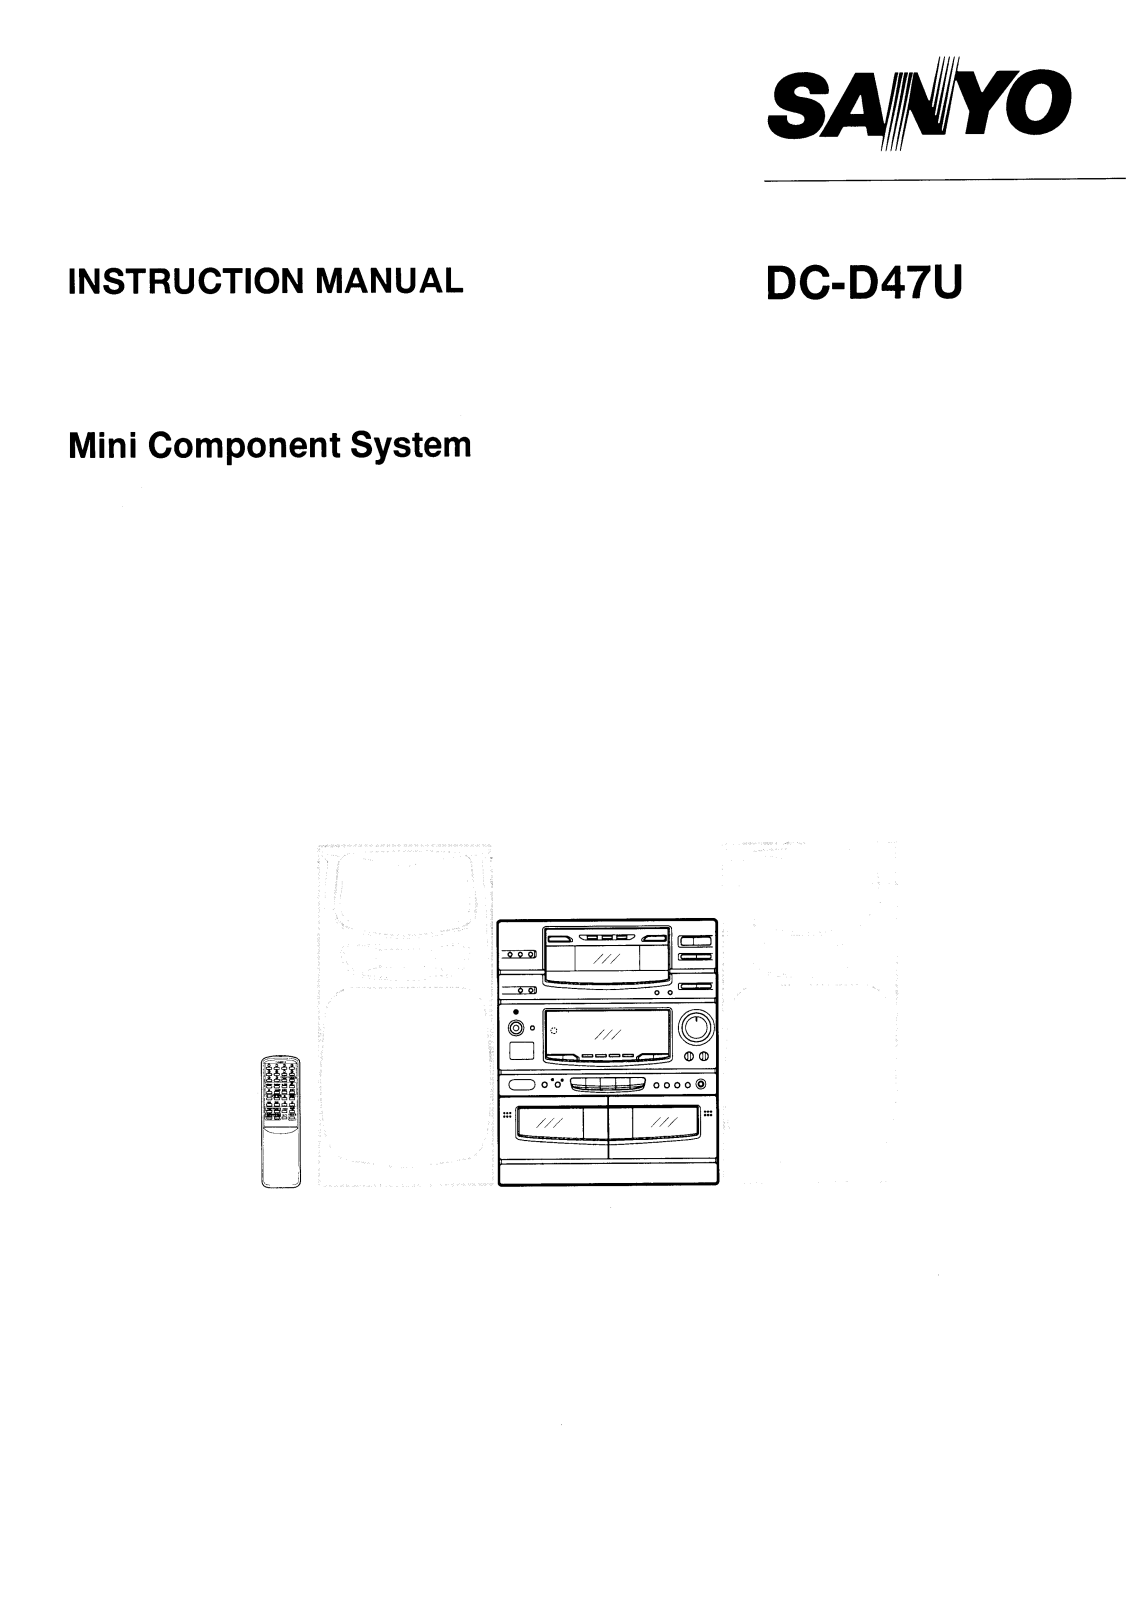 Sanyo DC-D47U Instruction Manual